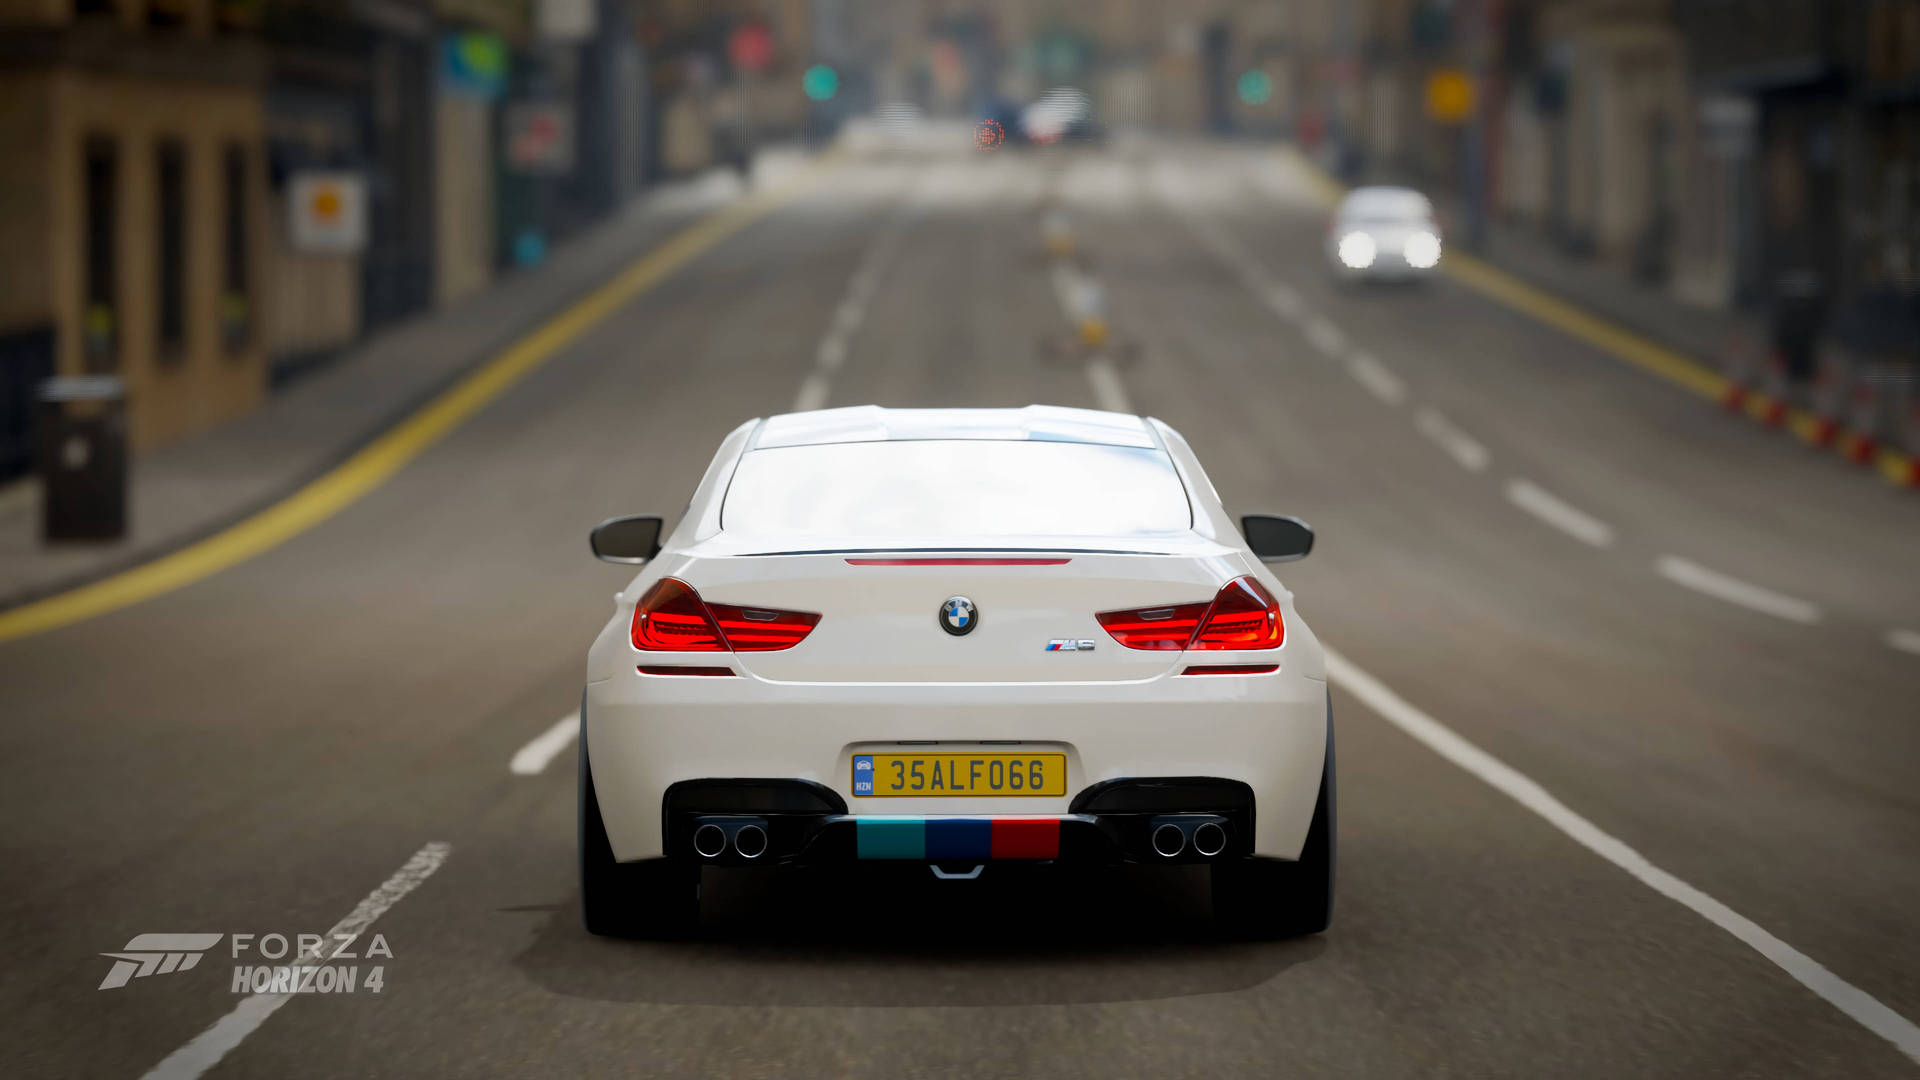 Forza 4 Shows A White Bmw Background